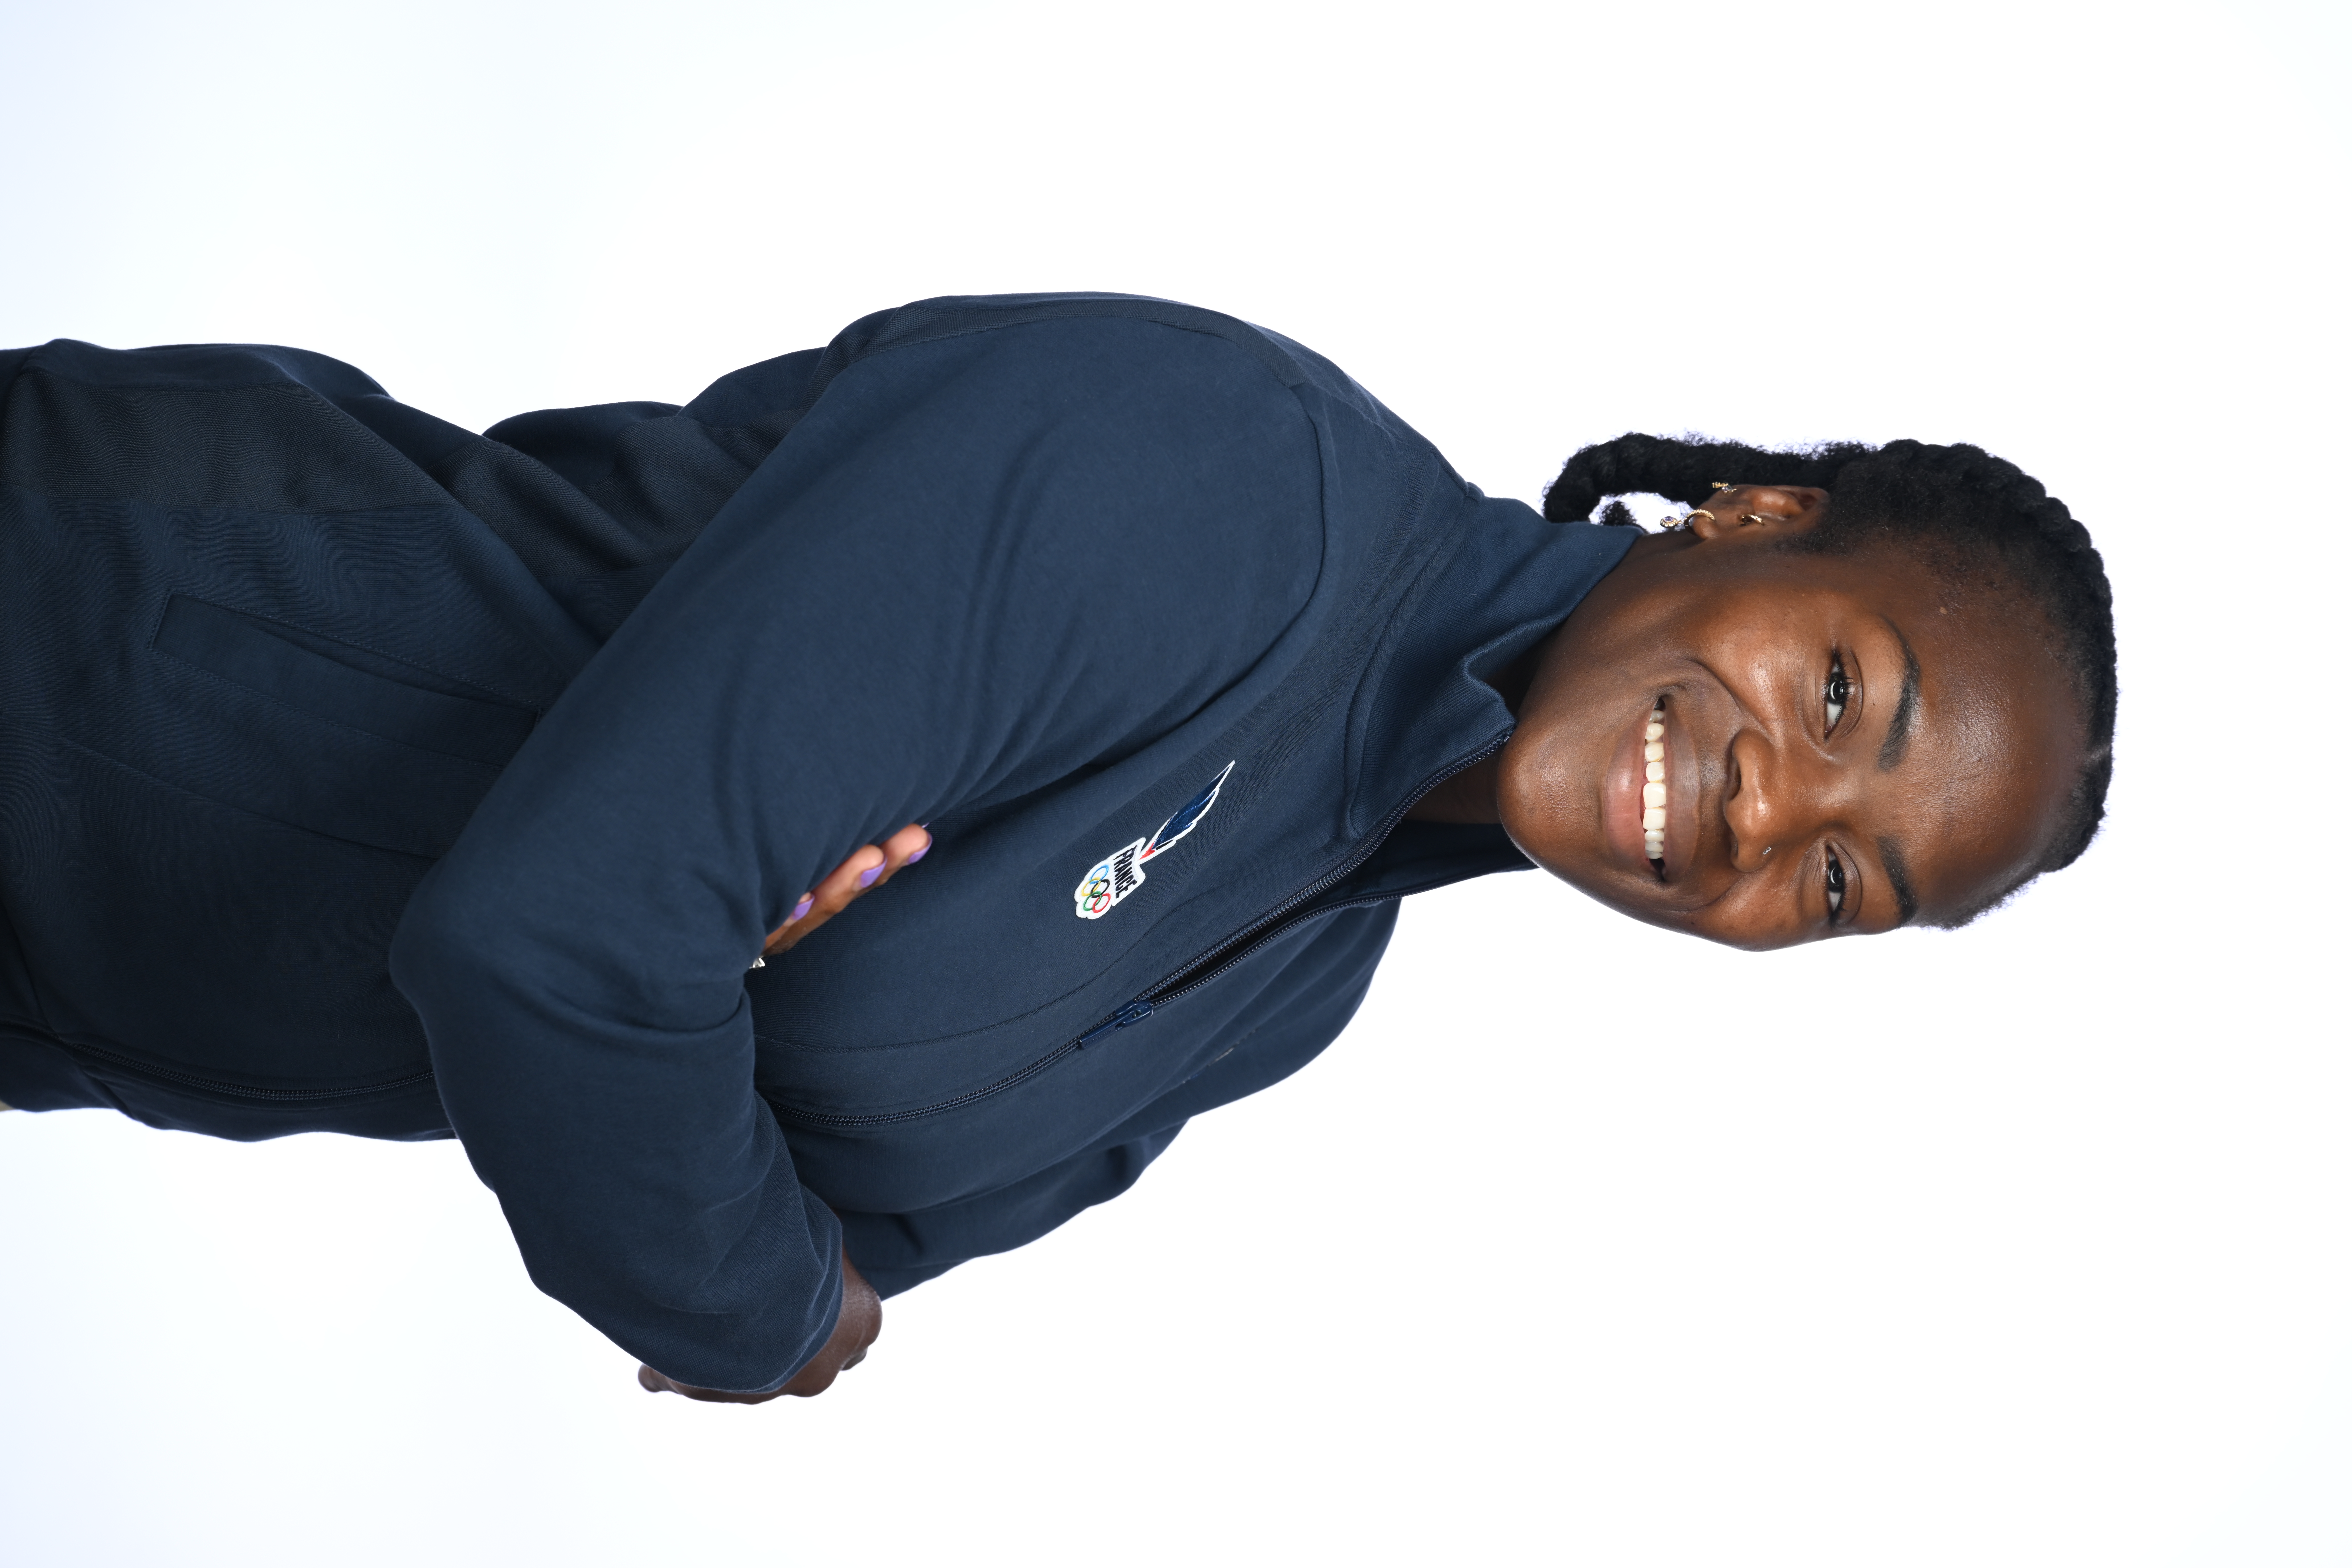 Clarisse Agbegnenou Equipe de France Olympique Judo